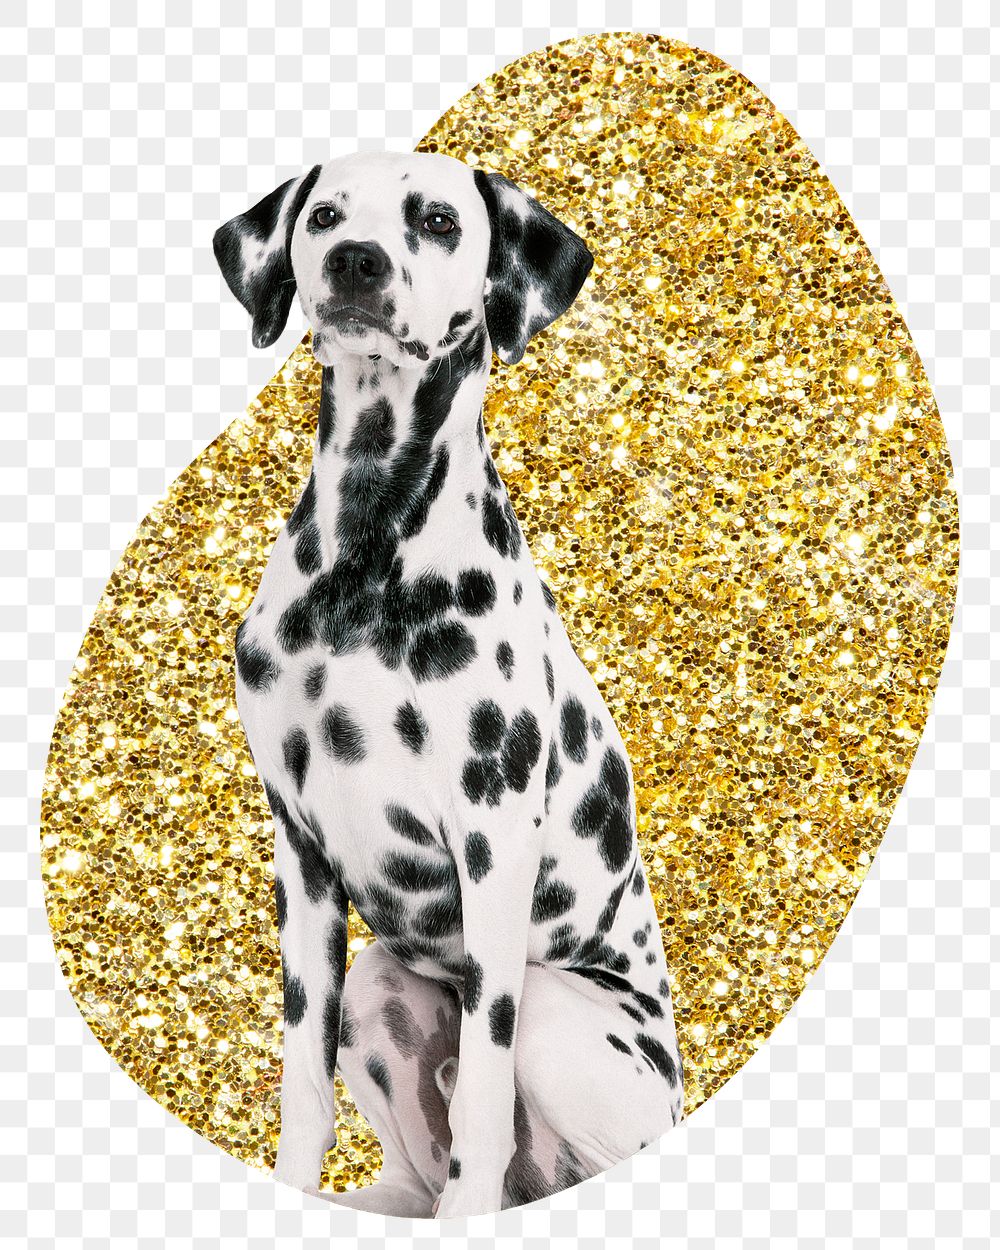 Dalmatian dog png badge sticker, gold glitter blob shape, transparent background